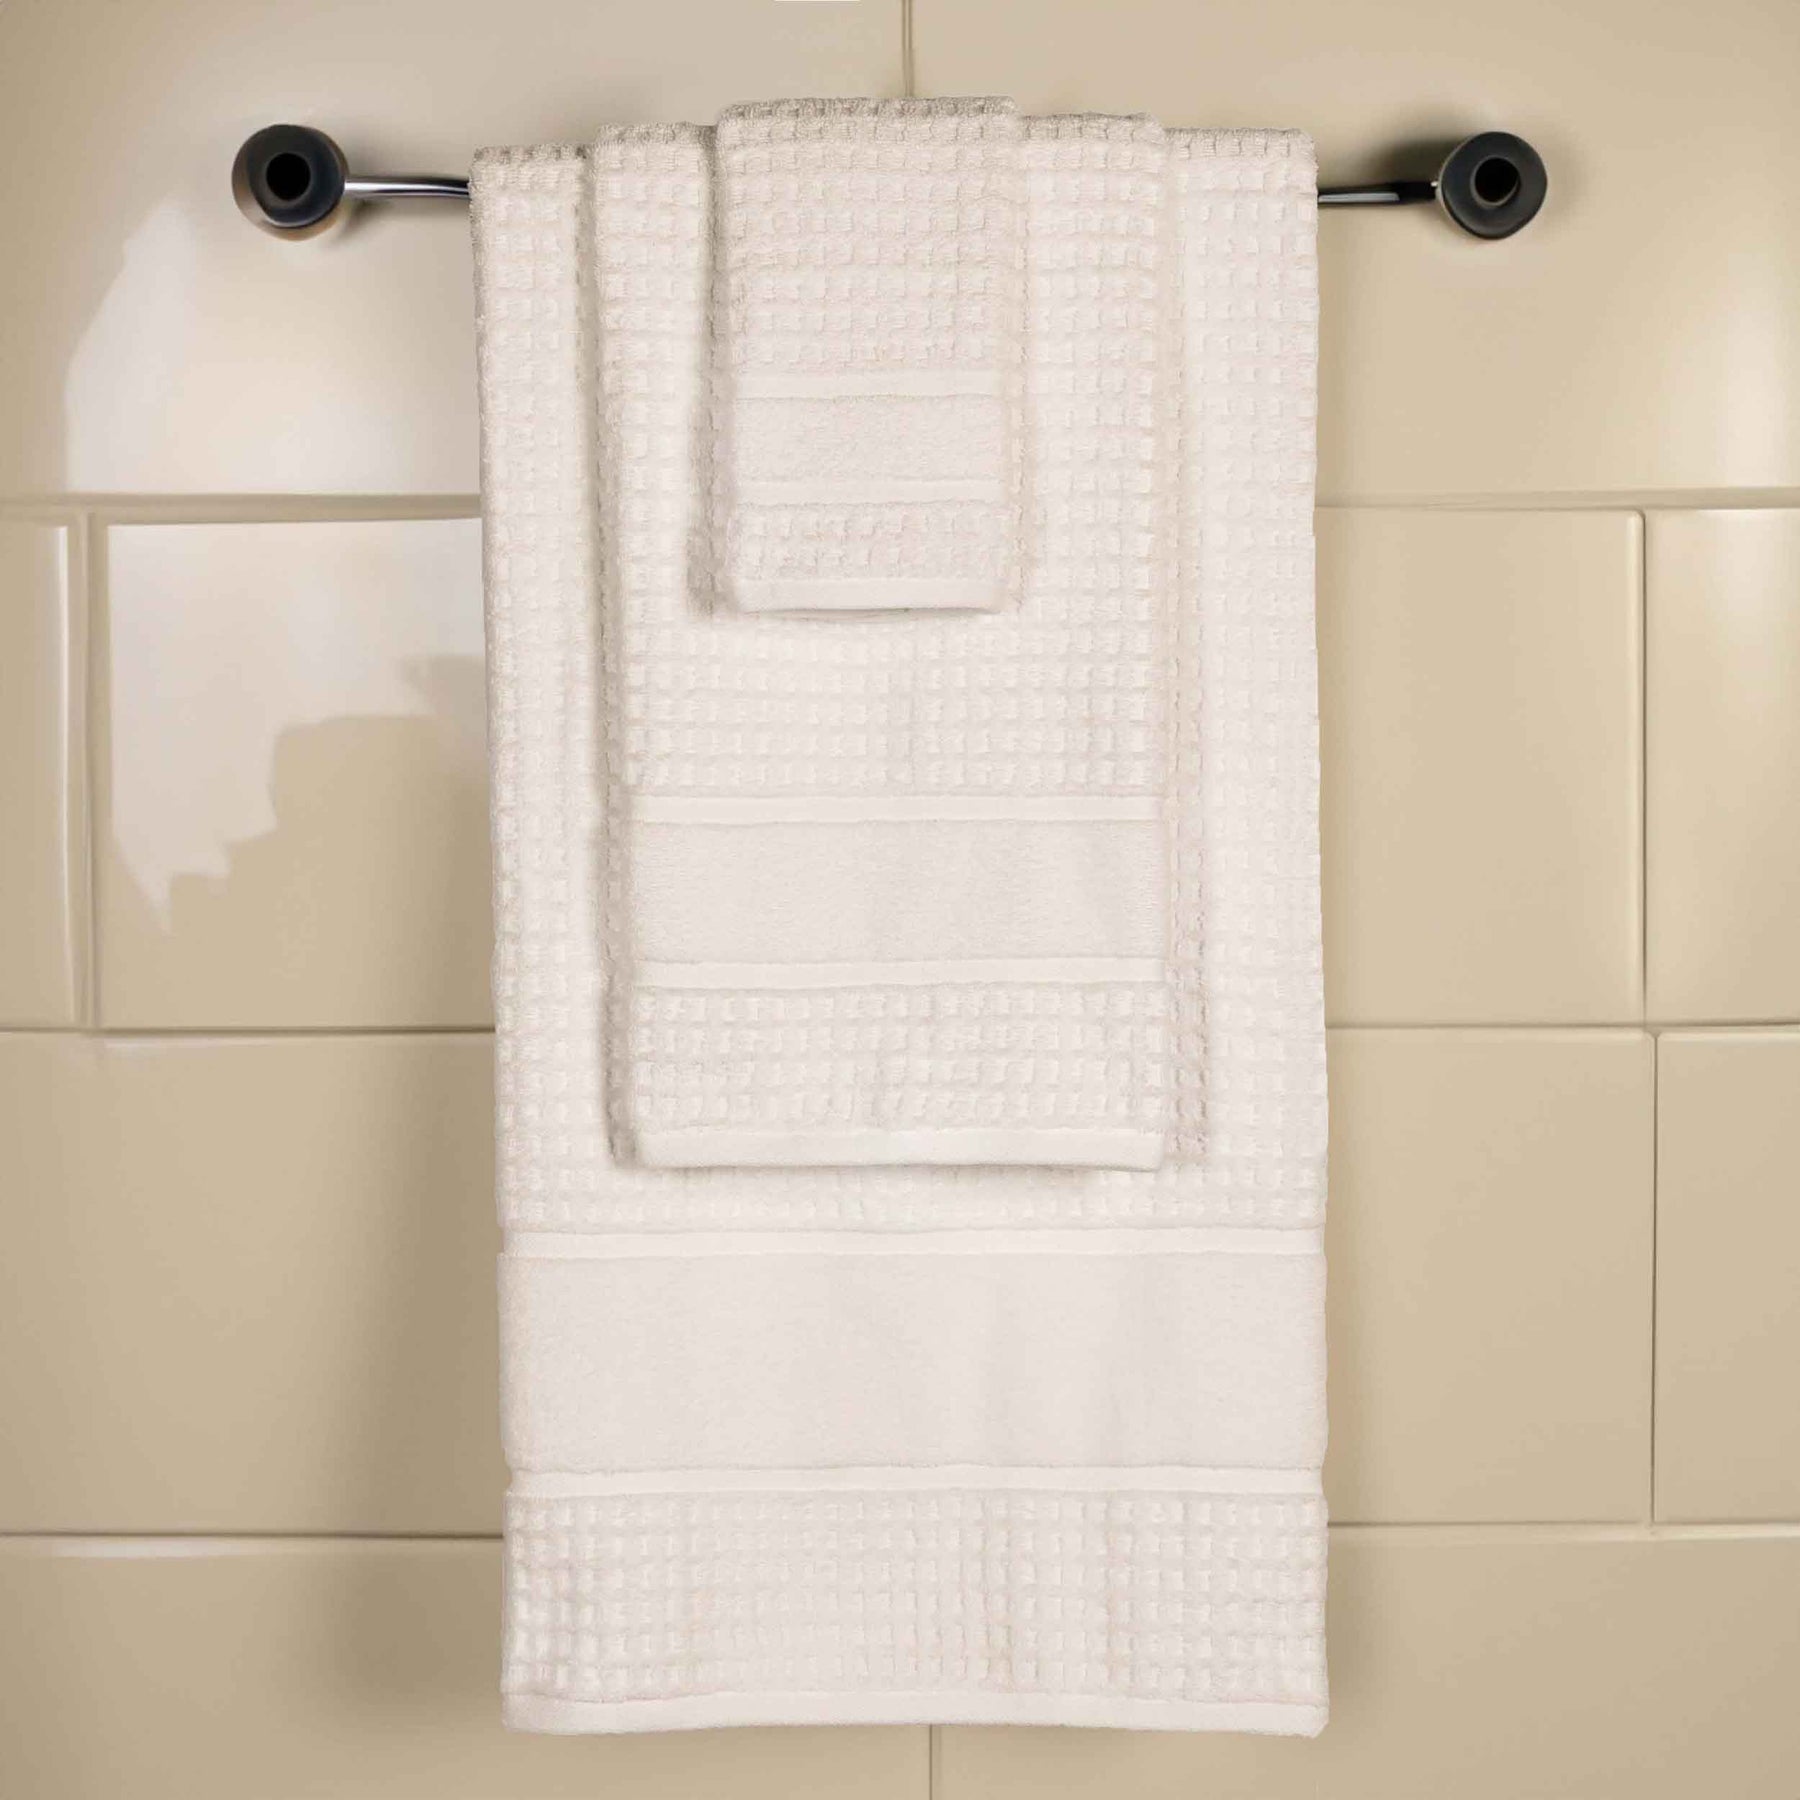 Zero Twist Cotton Waffle Honeycomb Plush Absorbent 3 Piece Towel Set - Ivory